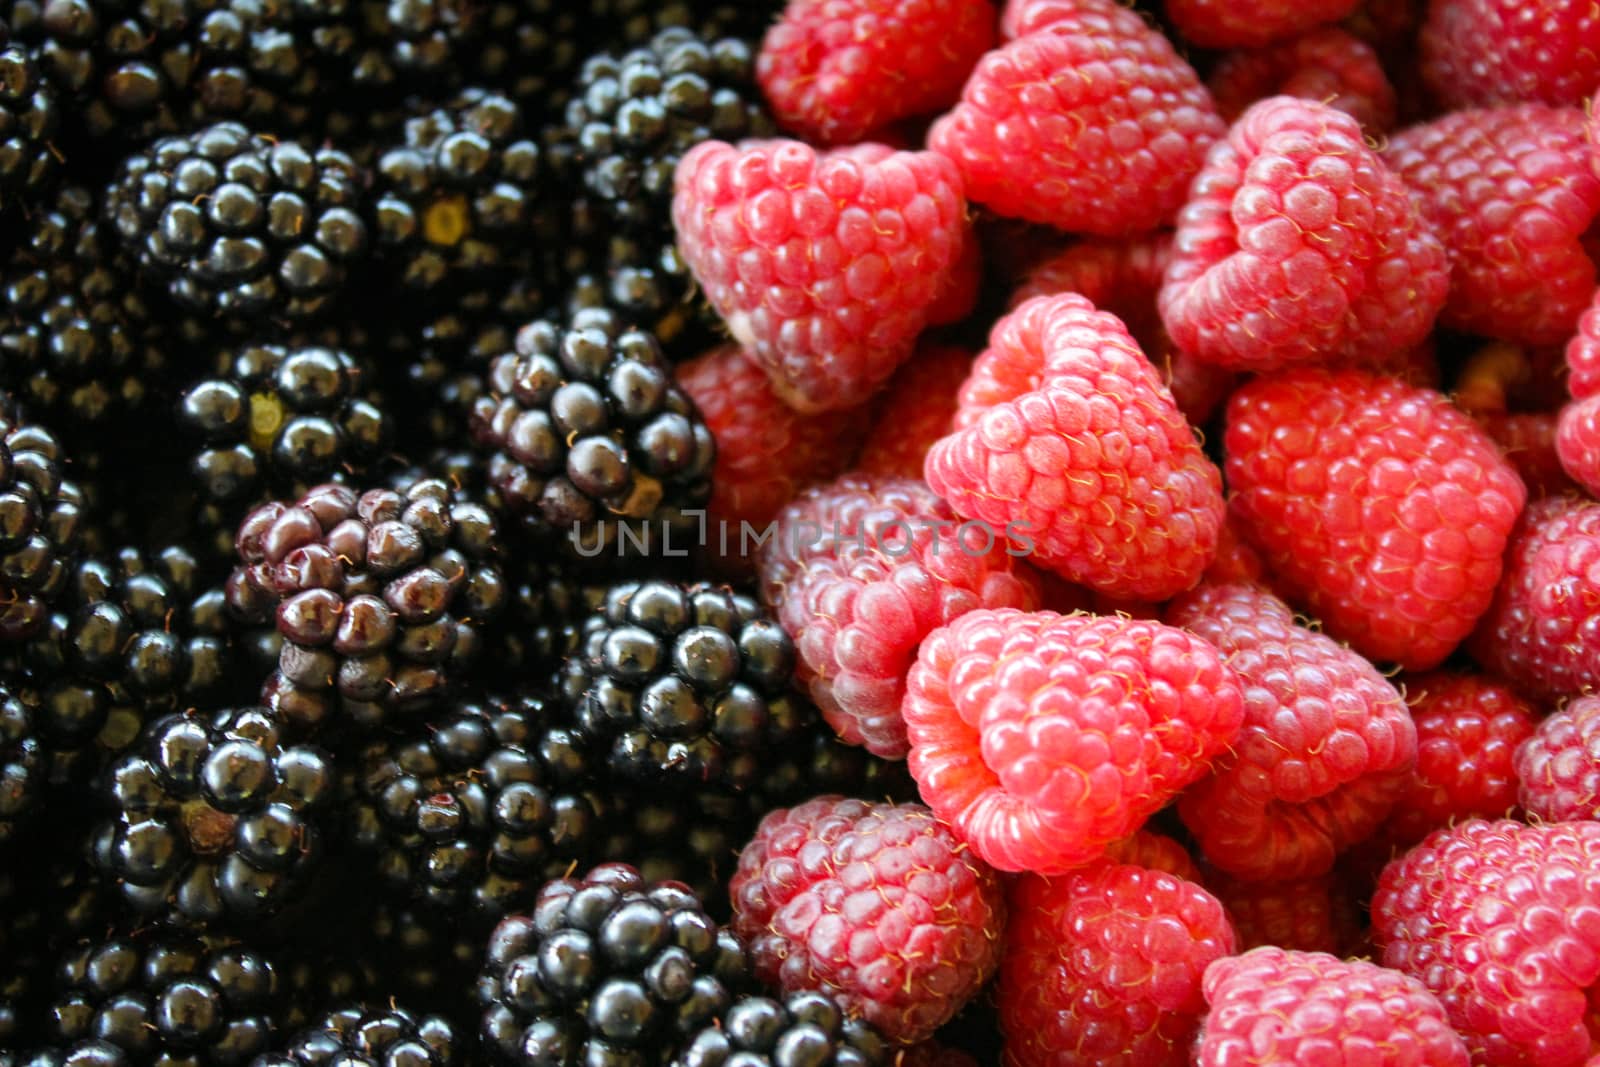 Full frame of blackberries and raspberries. On the left side blackberries and on the right side raspberries. Zavidovici, Bosnia and Herzegovina.